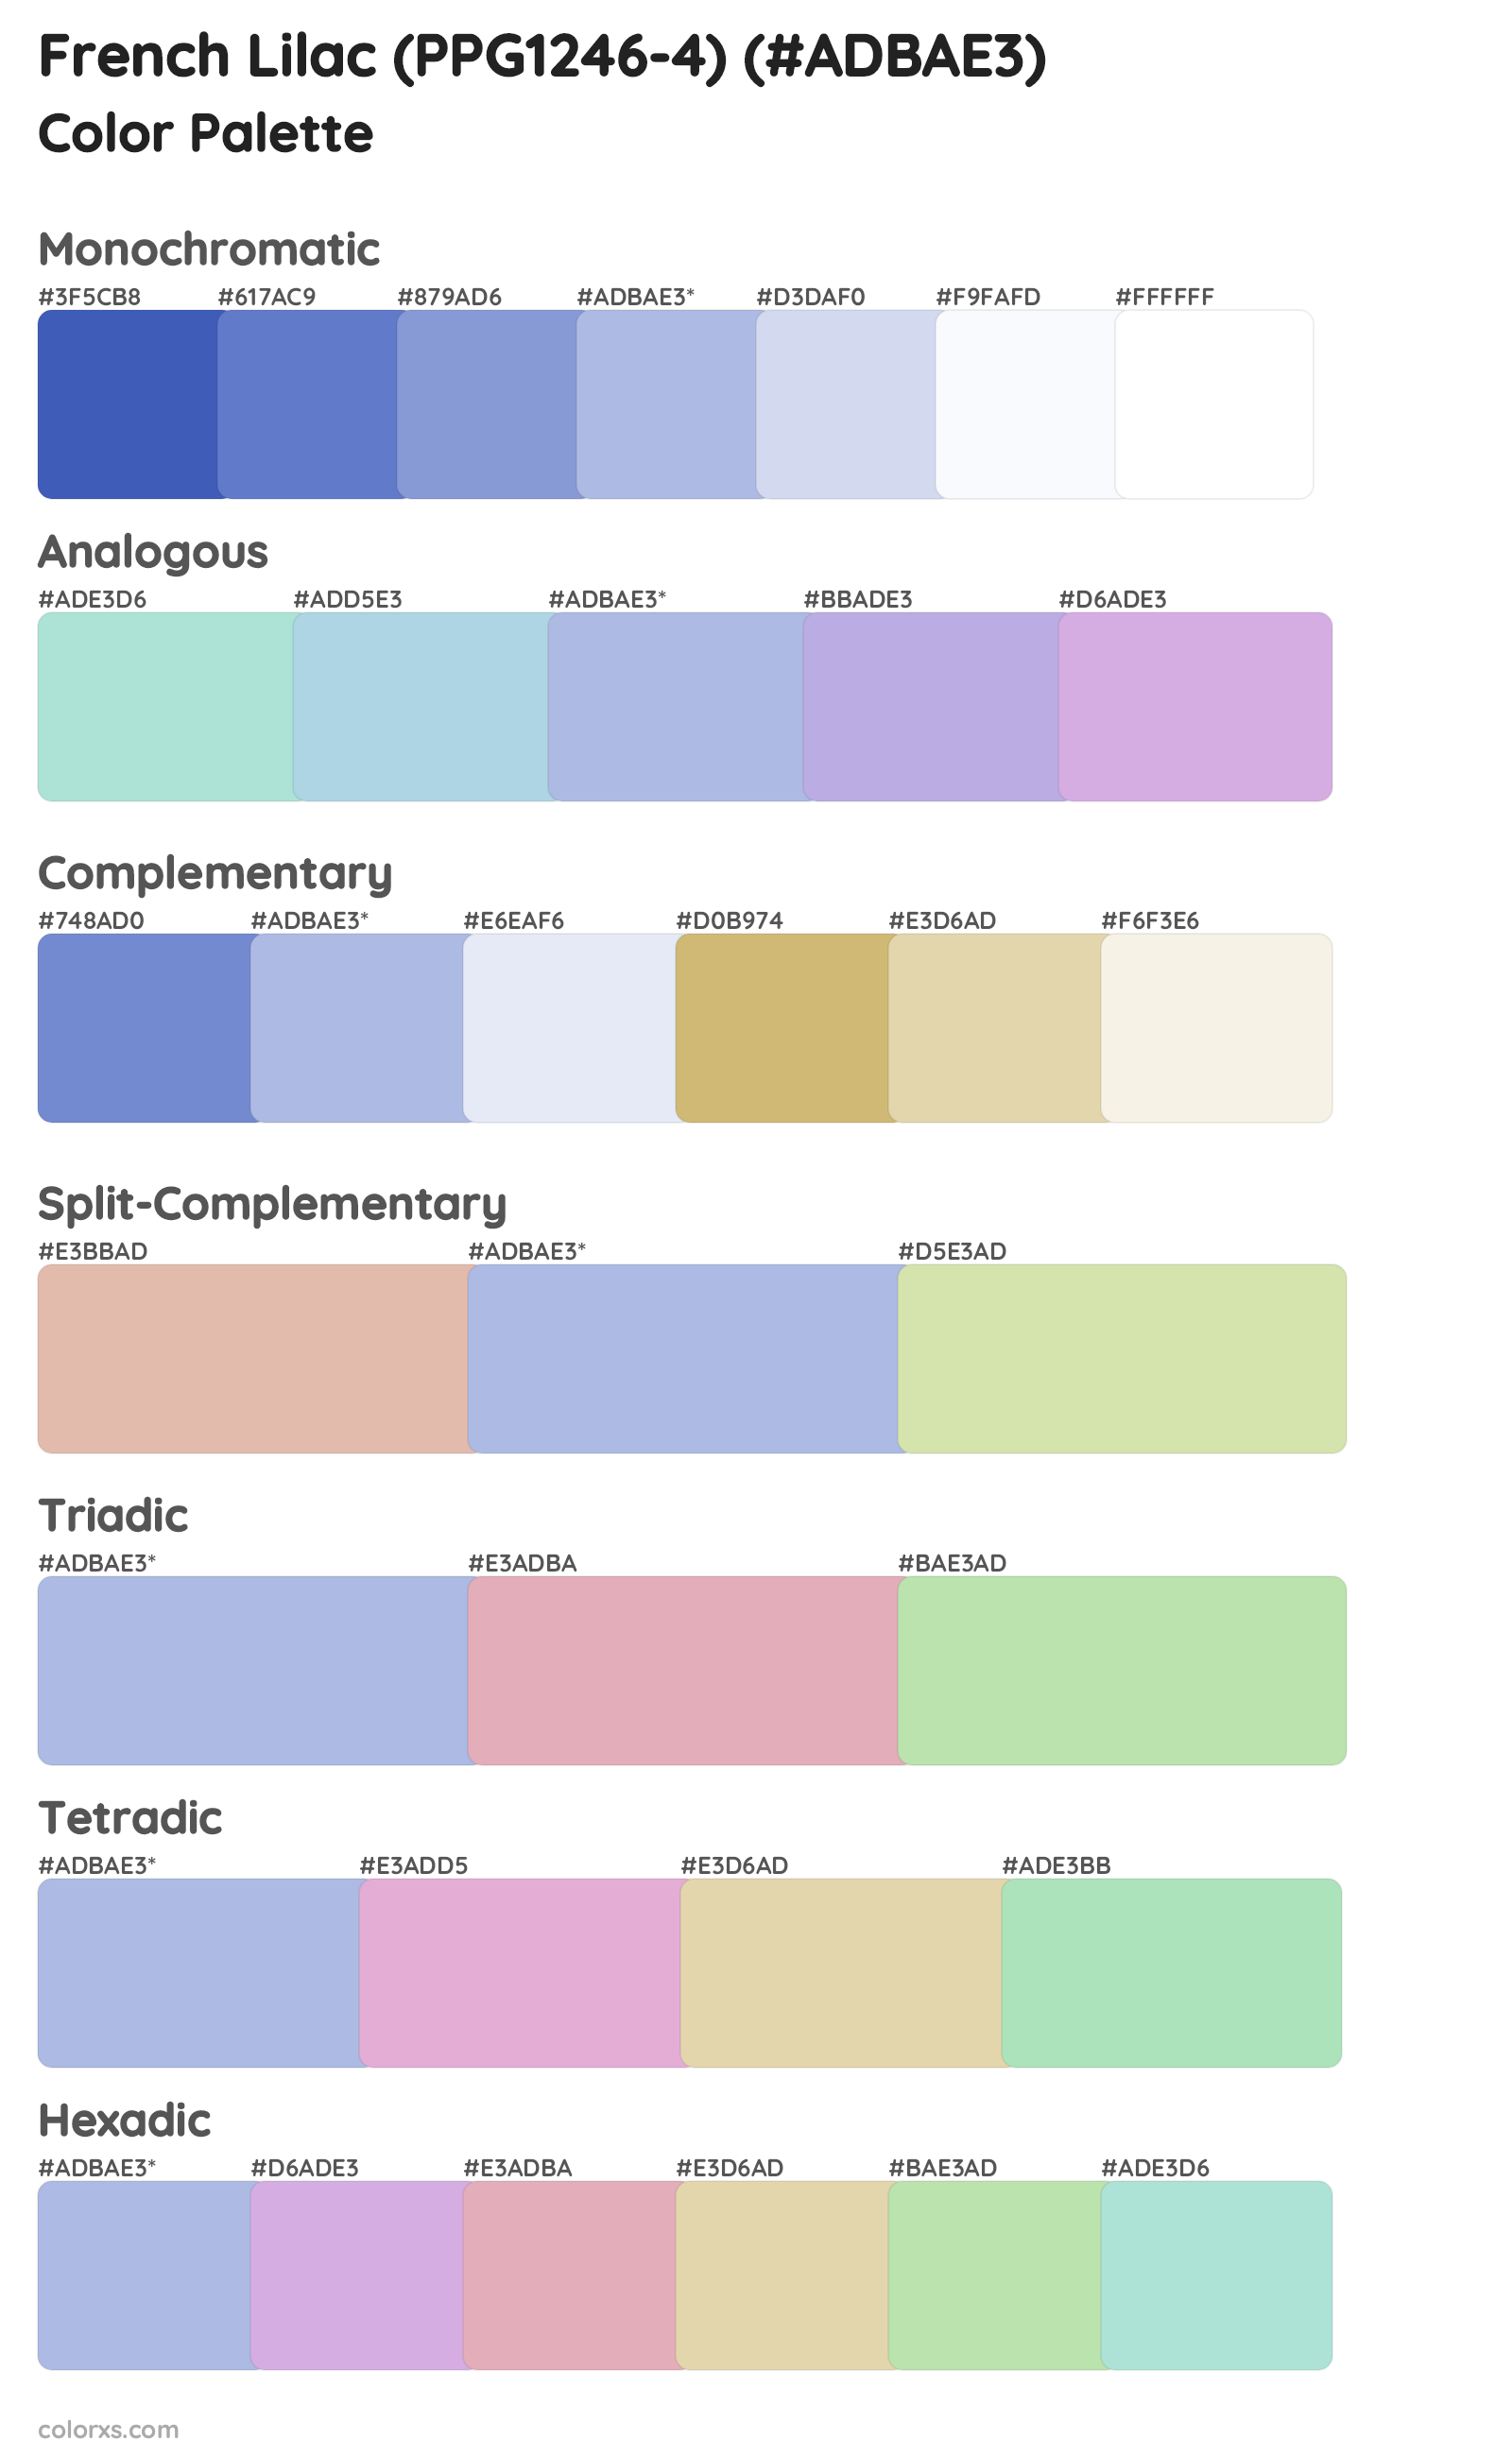 French Lilac (PPG1246-4) Color Scheme Palettes